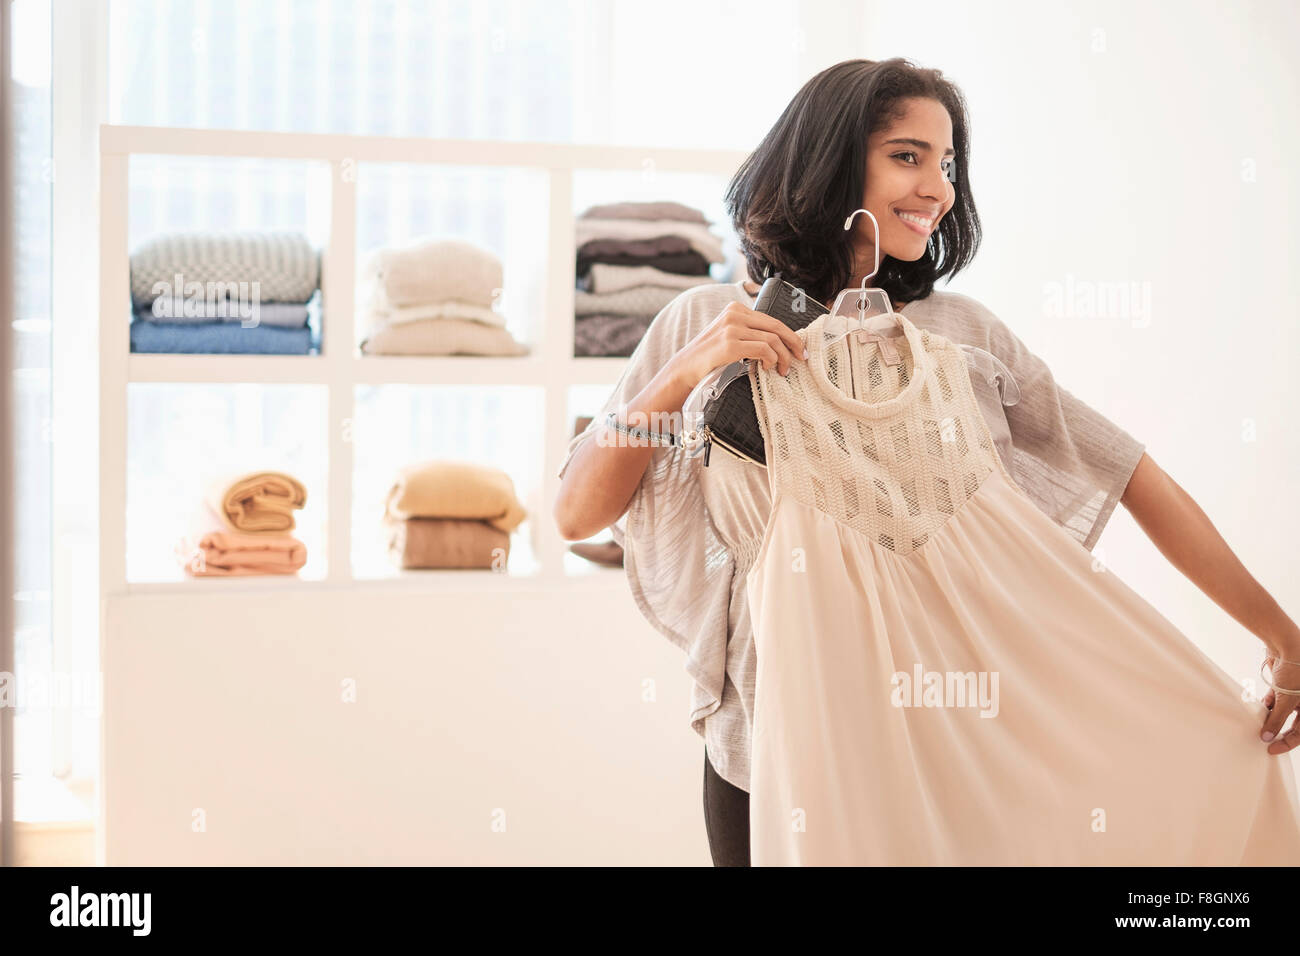 Hispanic woman admiring clothing in store Stock Photo